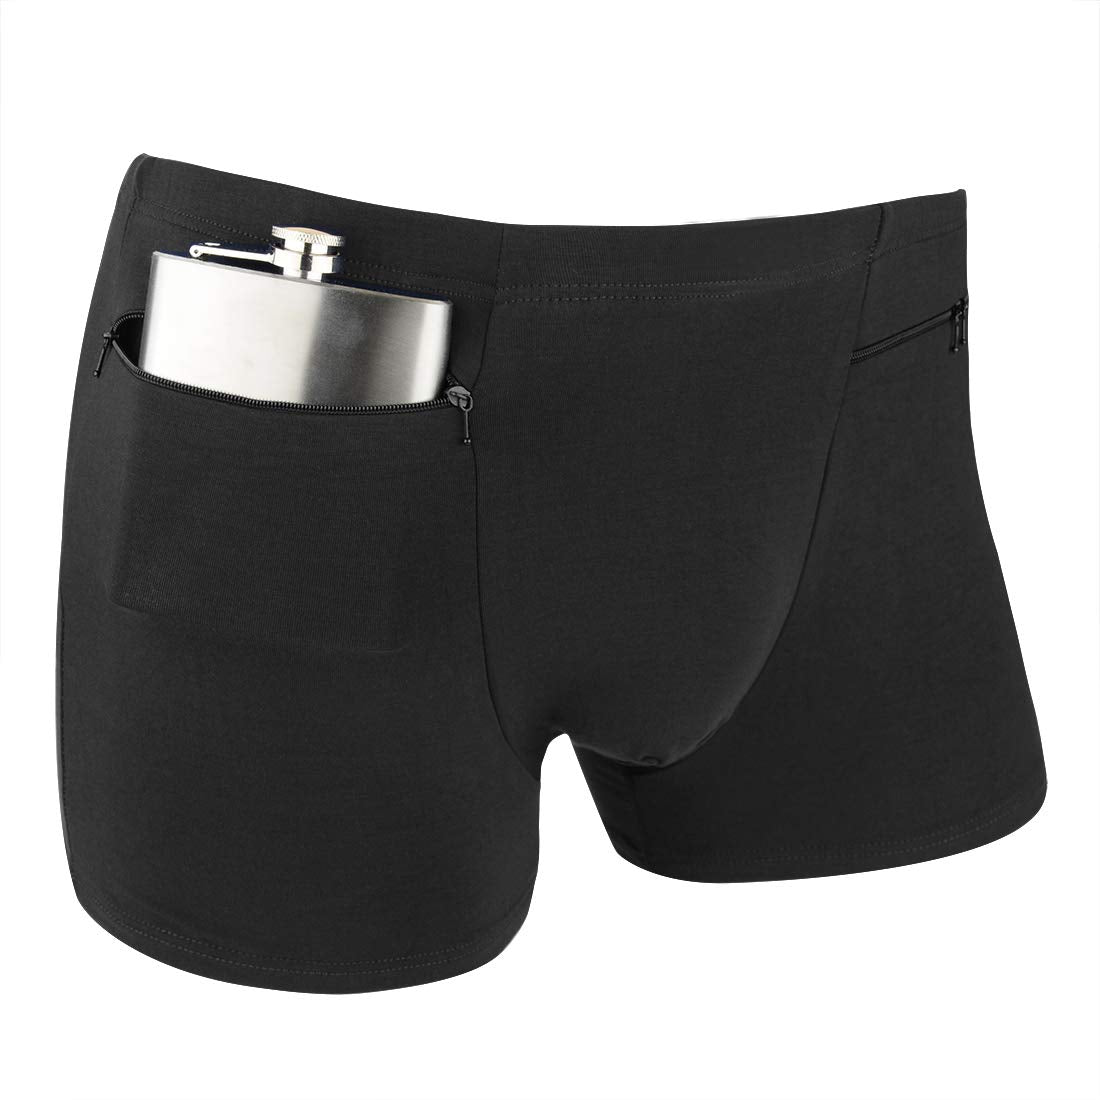 Pocket Underwear for Men with Secret Hidden Pocket Secret Wearables